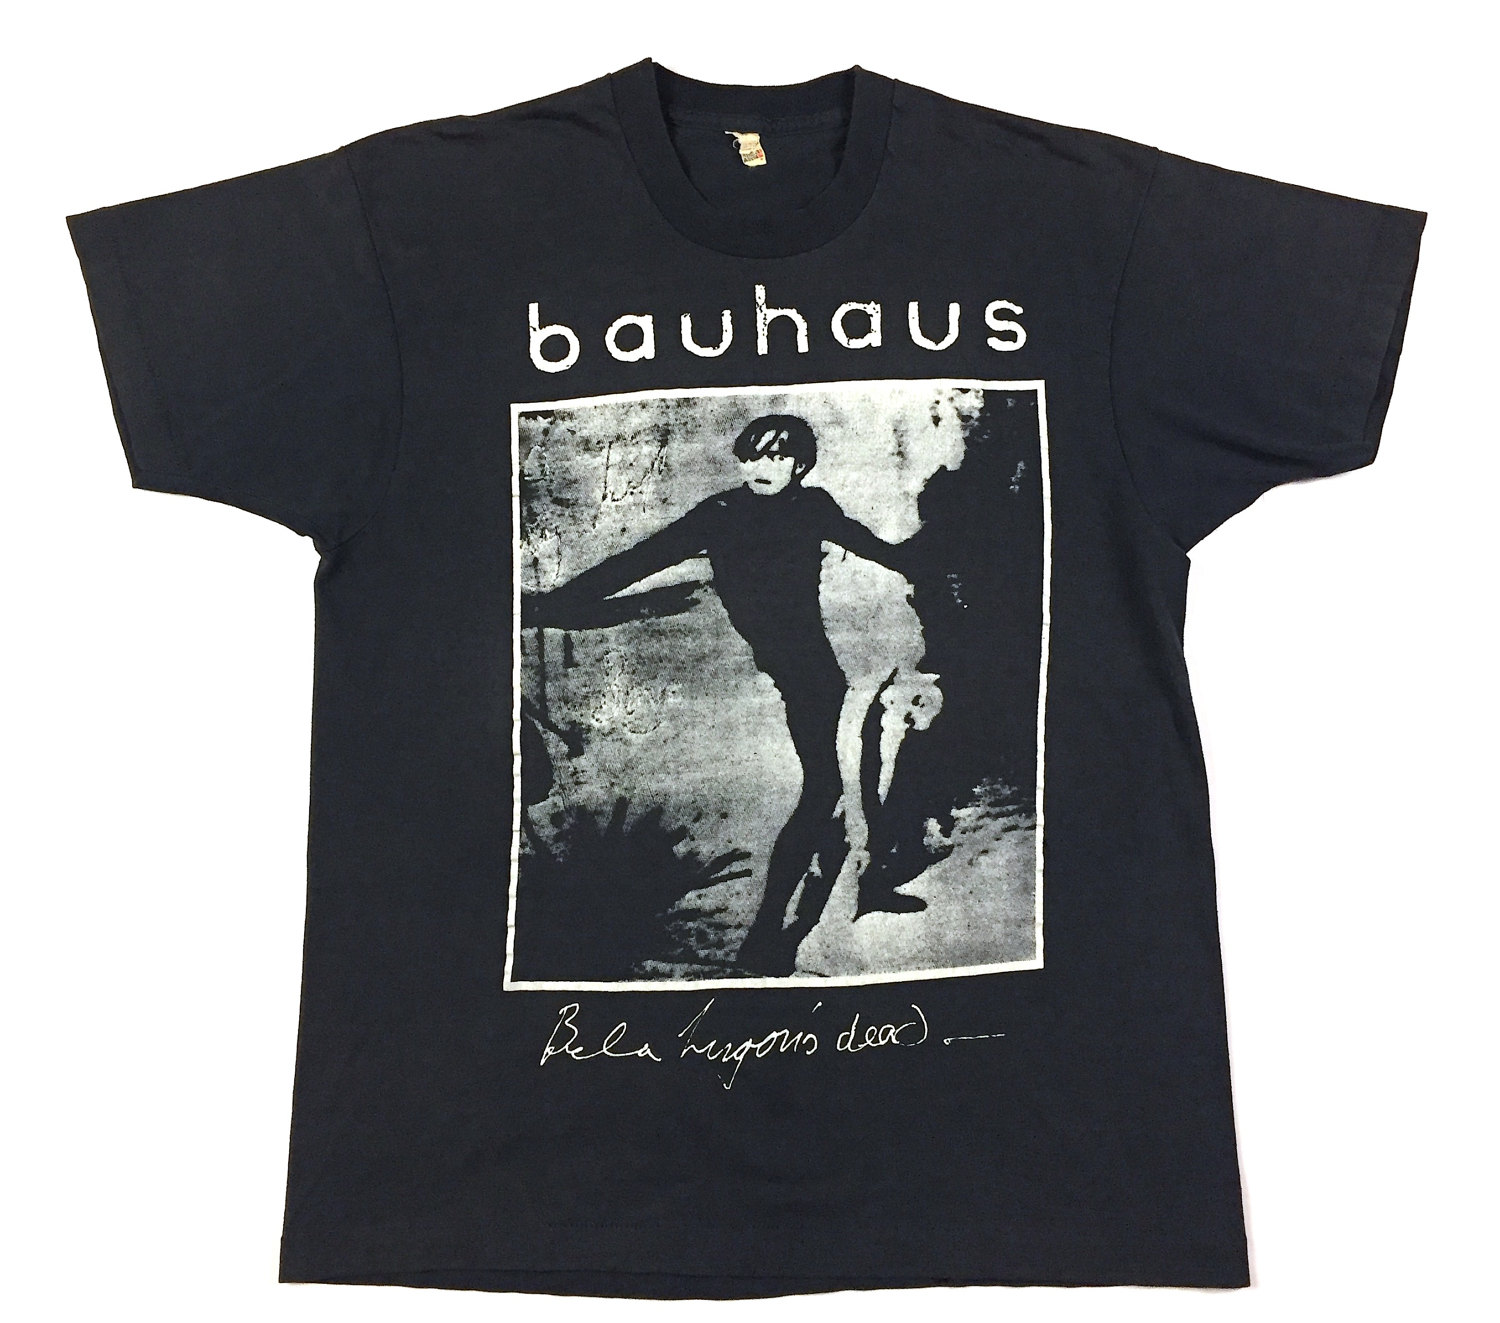 Homme Noir T-Shirt Bauhaus Bela lugosis DEAD RECORD goth rock vinyle Vampire S-5XL 